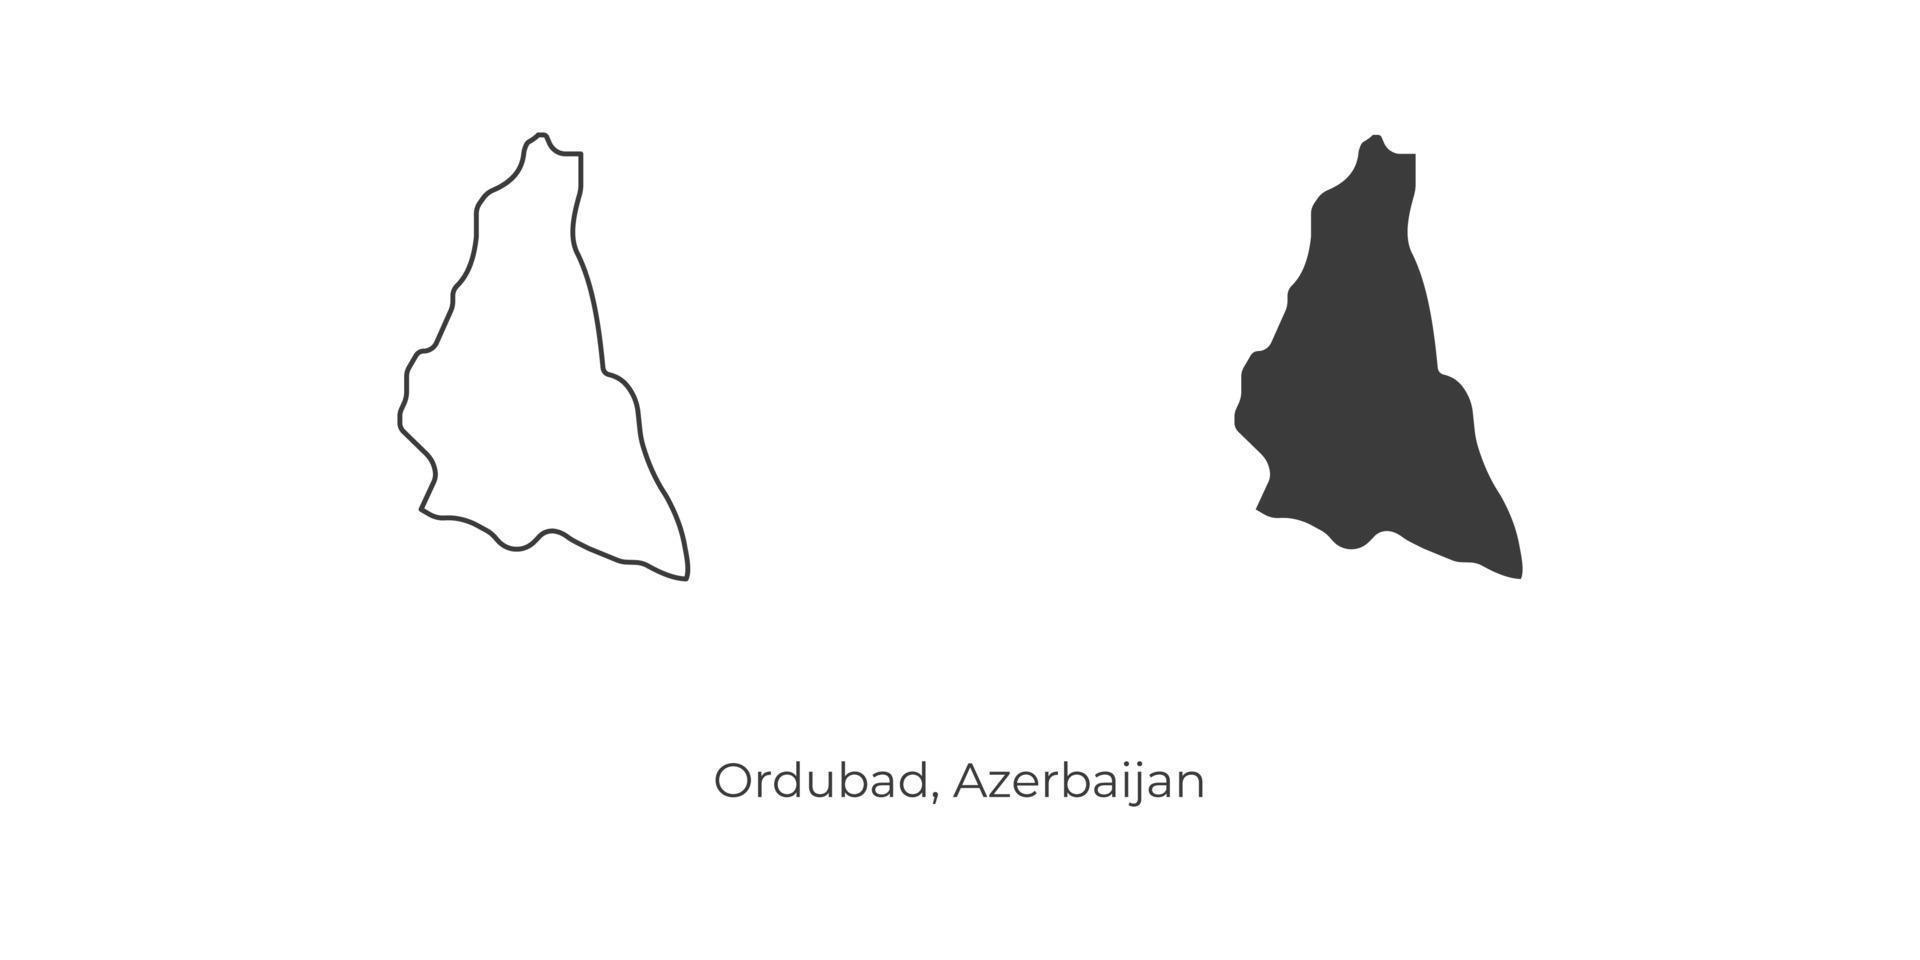 illustration vectorielle simple de la carte ordubad, azerbaïdjan. vecteur